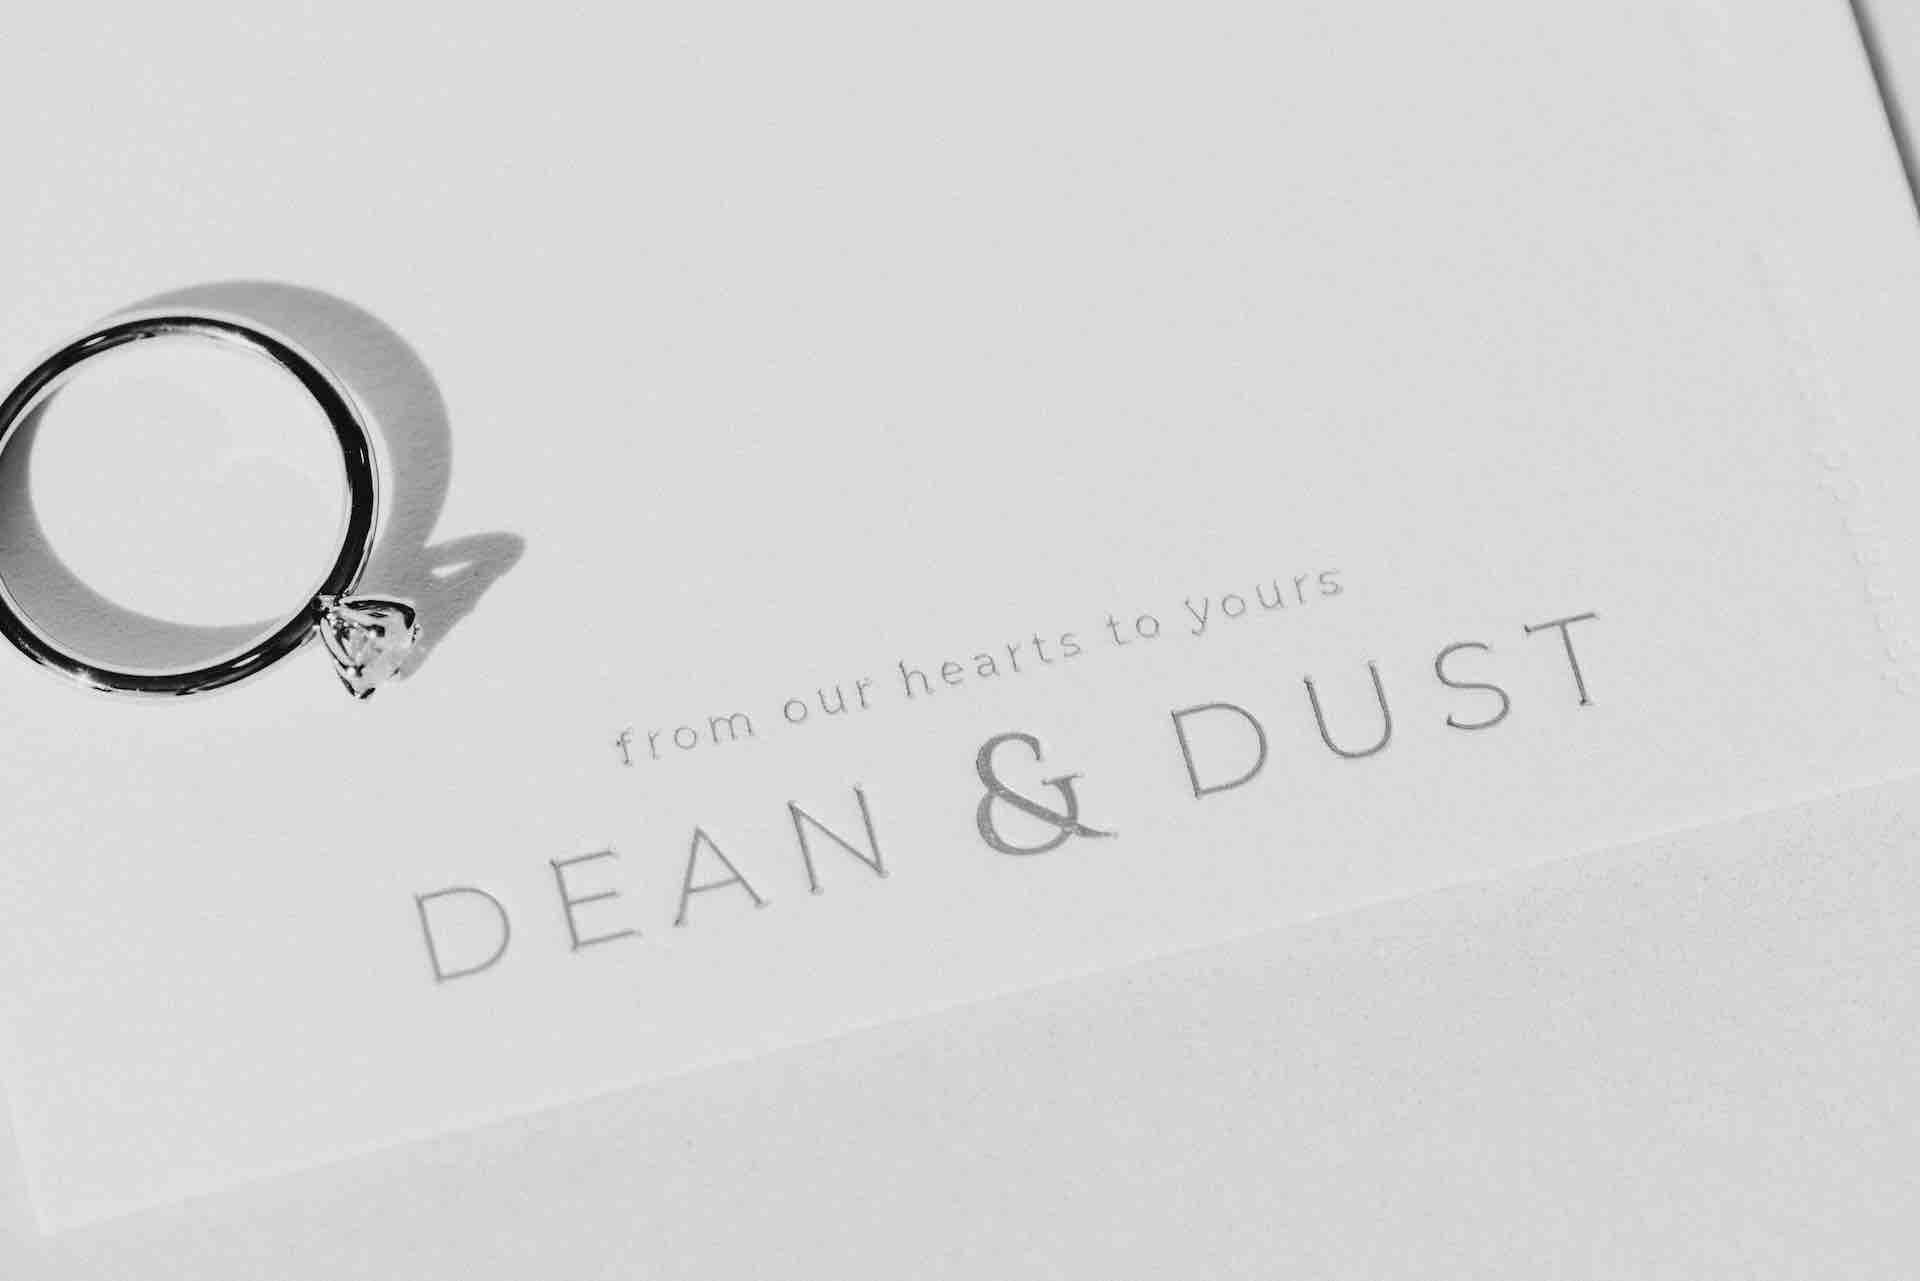 Solitaire Engagement Ring - Bespoke Design - Dean & Dust